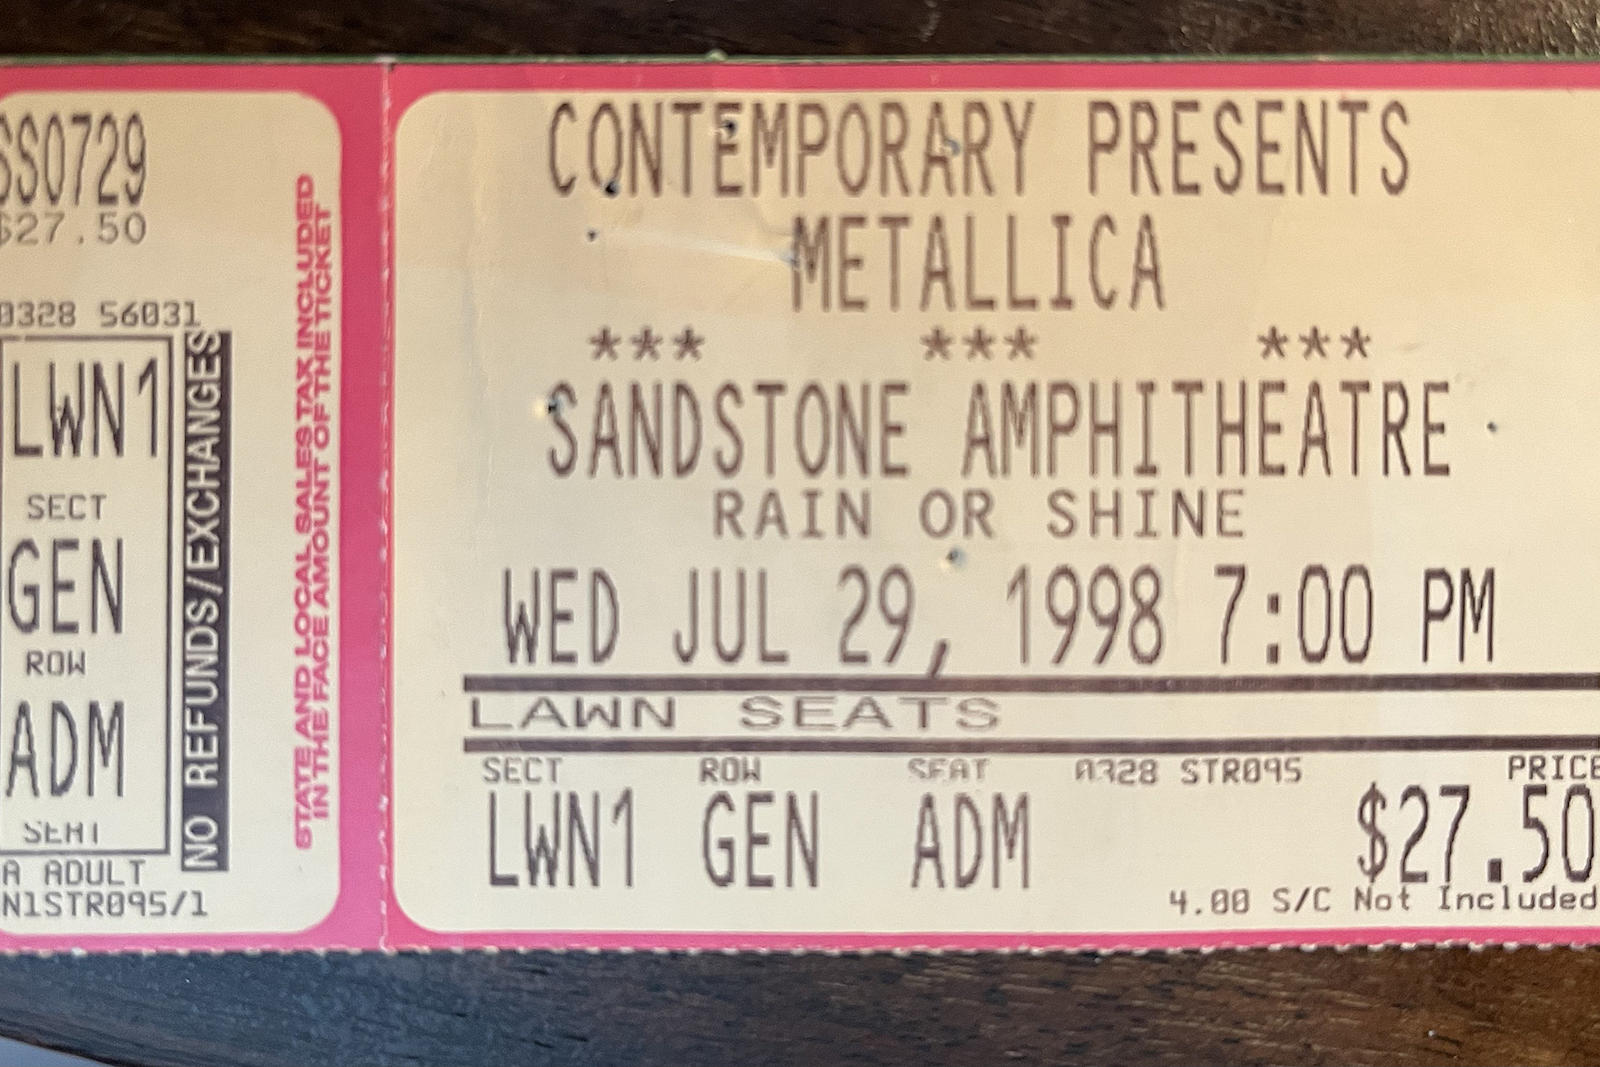 1984 Metallica Flyer and Ticket Stub